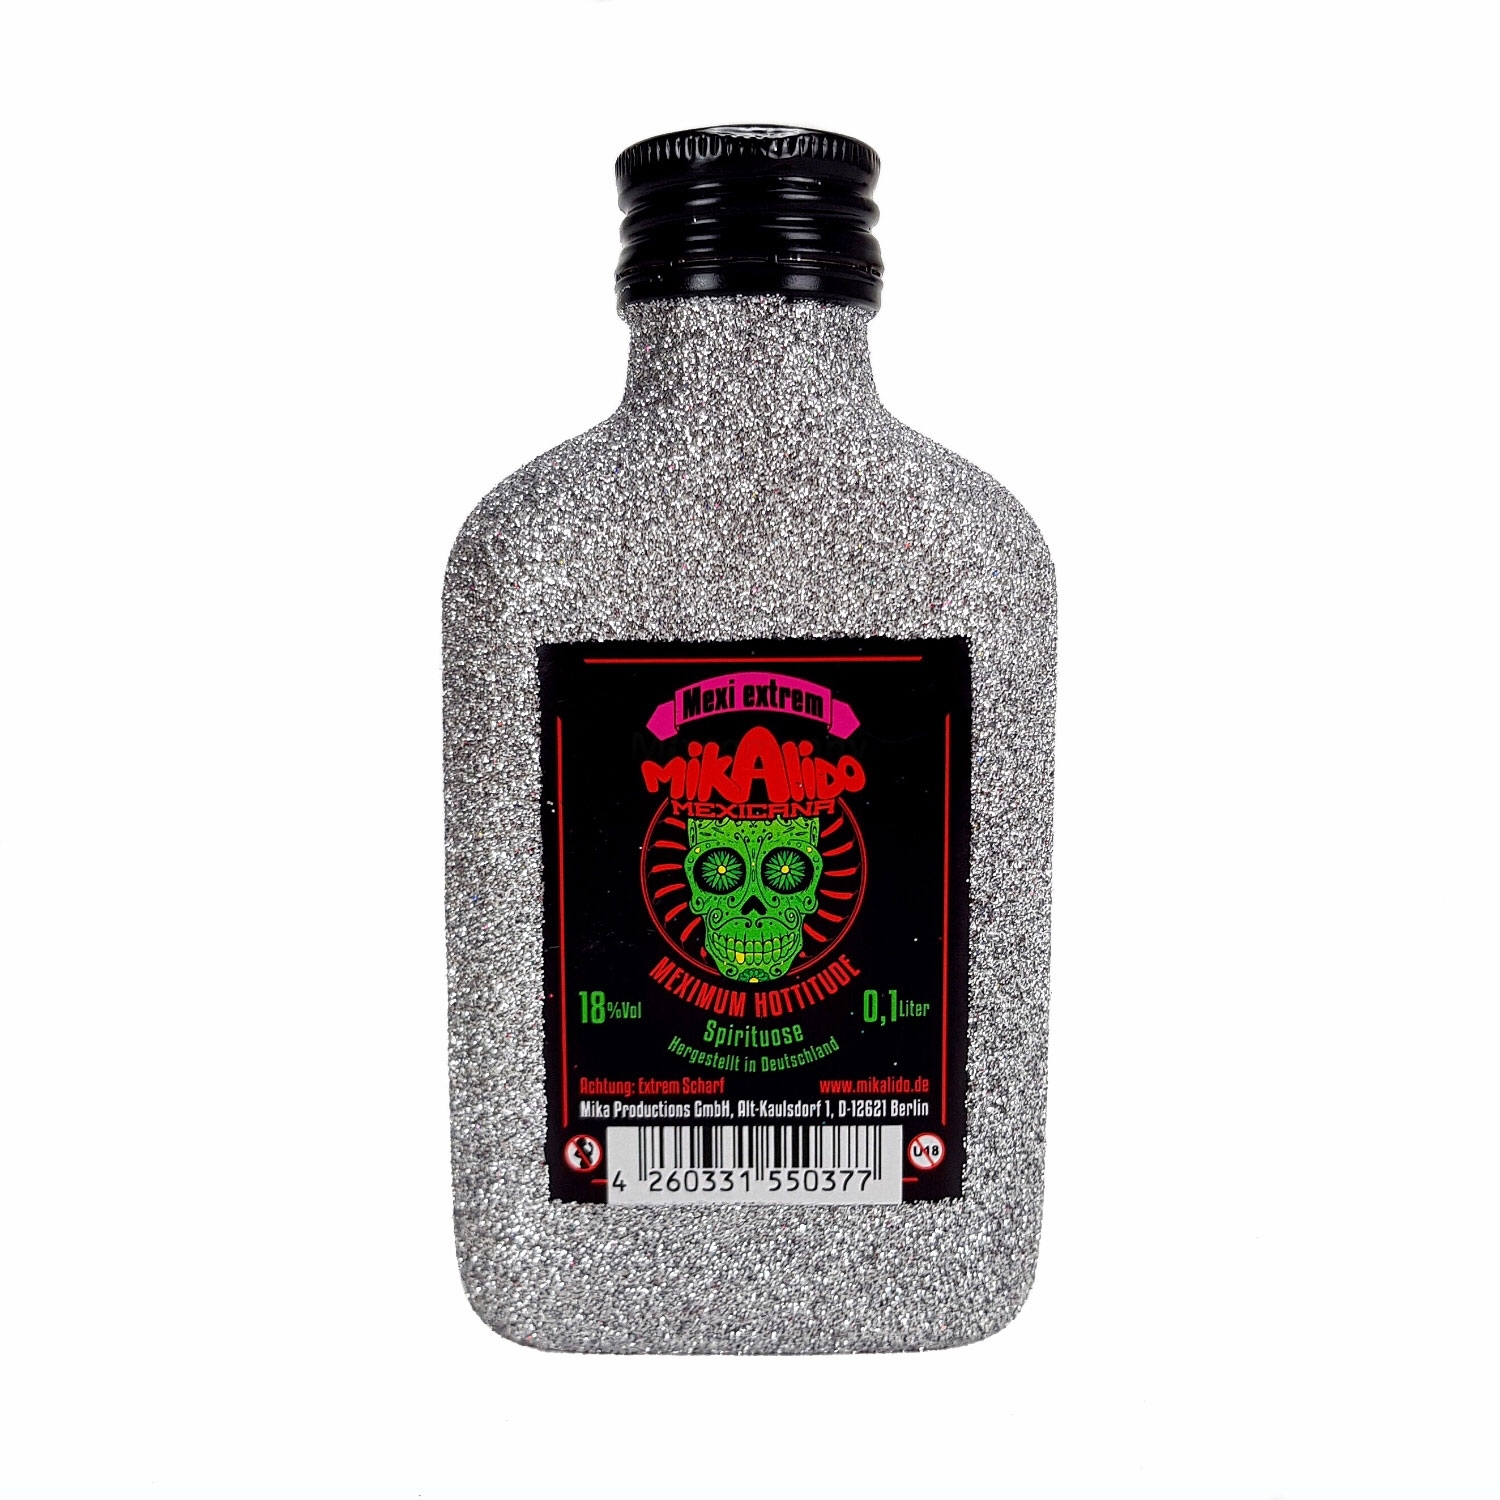 Mikalido Mexicana Mexi extrem scharf Spirituose 0,1l (18% Vol) Blin Bling Glitzerflasche in silber -[Enthält Sulfite]